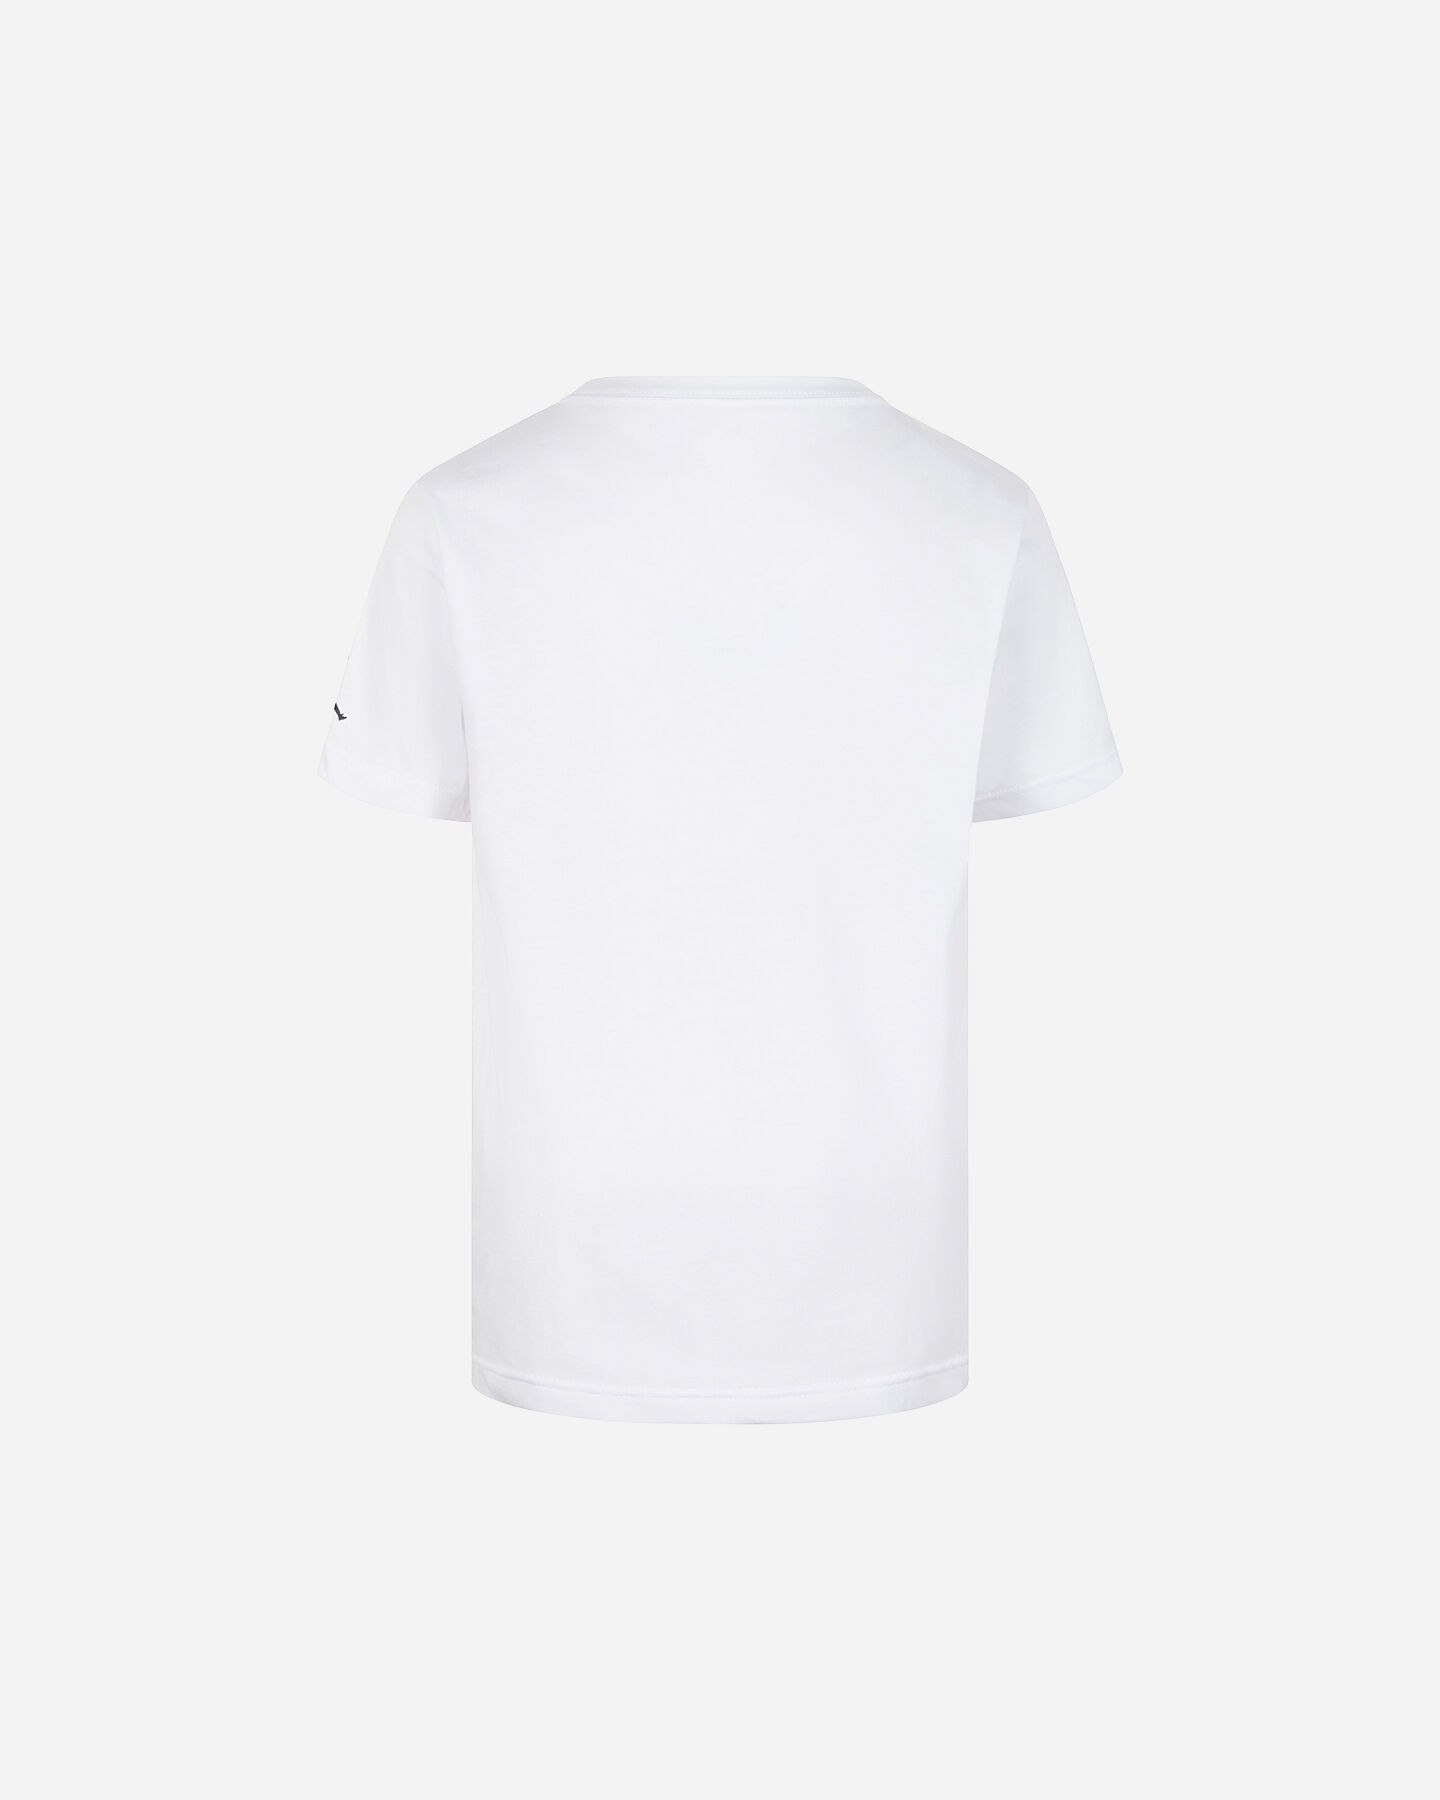  T-Shirt NIKE JORDAN TUNDER JR S5640180|001|8-10Y scatto 1